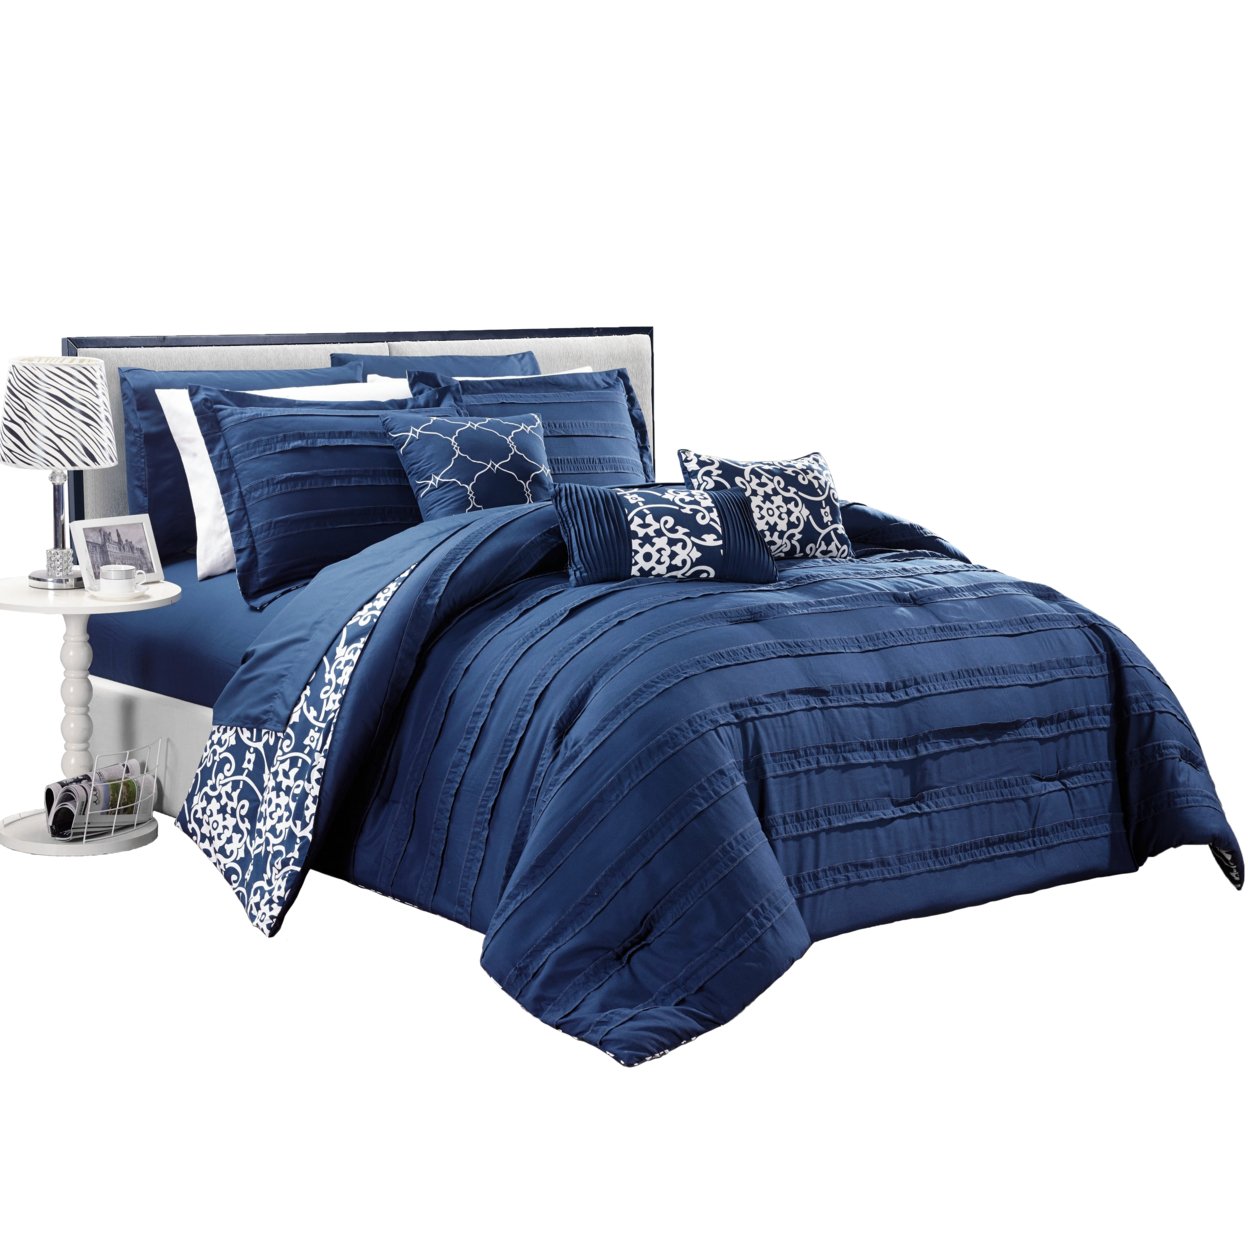 10-Piece Reversible Bed In A Bag Comforter & Sheet Set, Multiple Colors - Grey, Queen